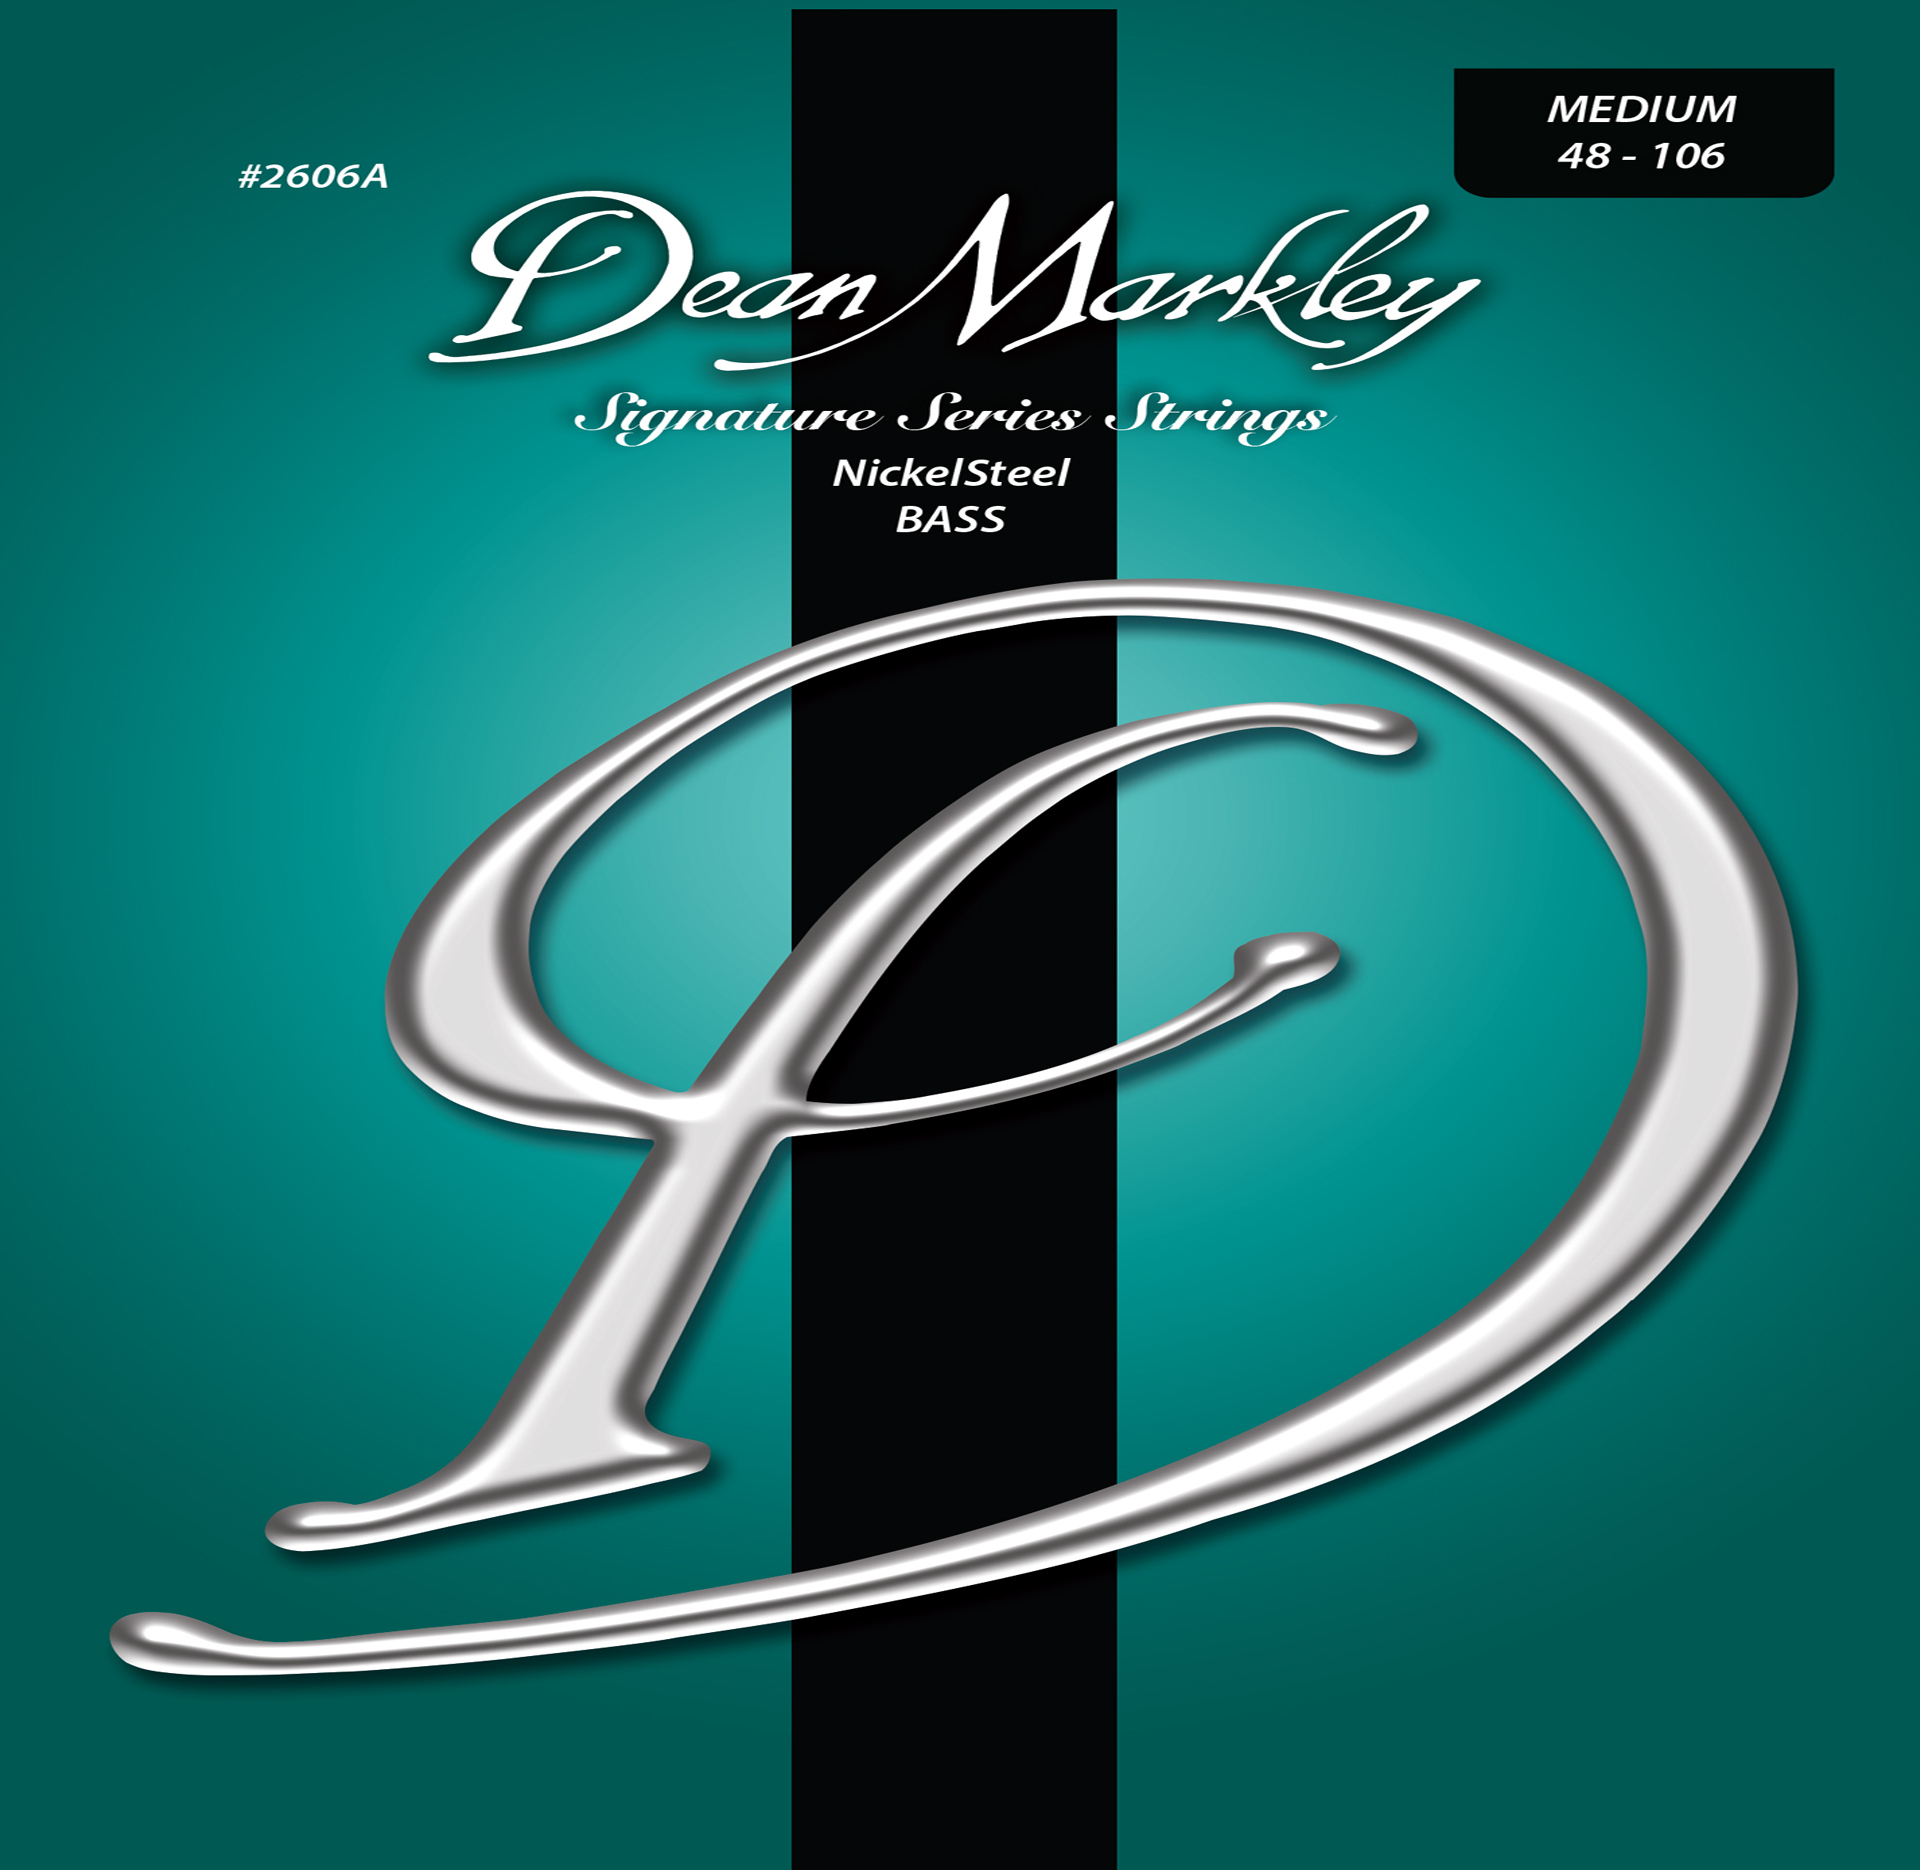 Dean Markley Signature - 2606 A - Electric Bass String Set, 4-String, Medium, .048-.106